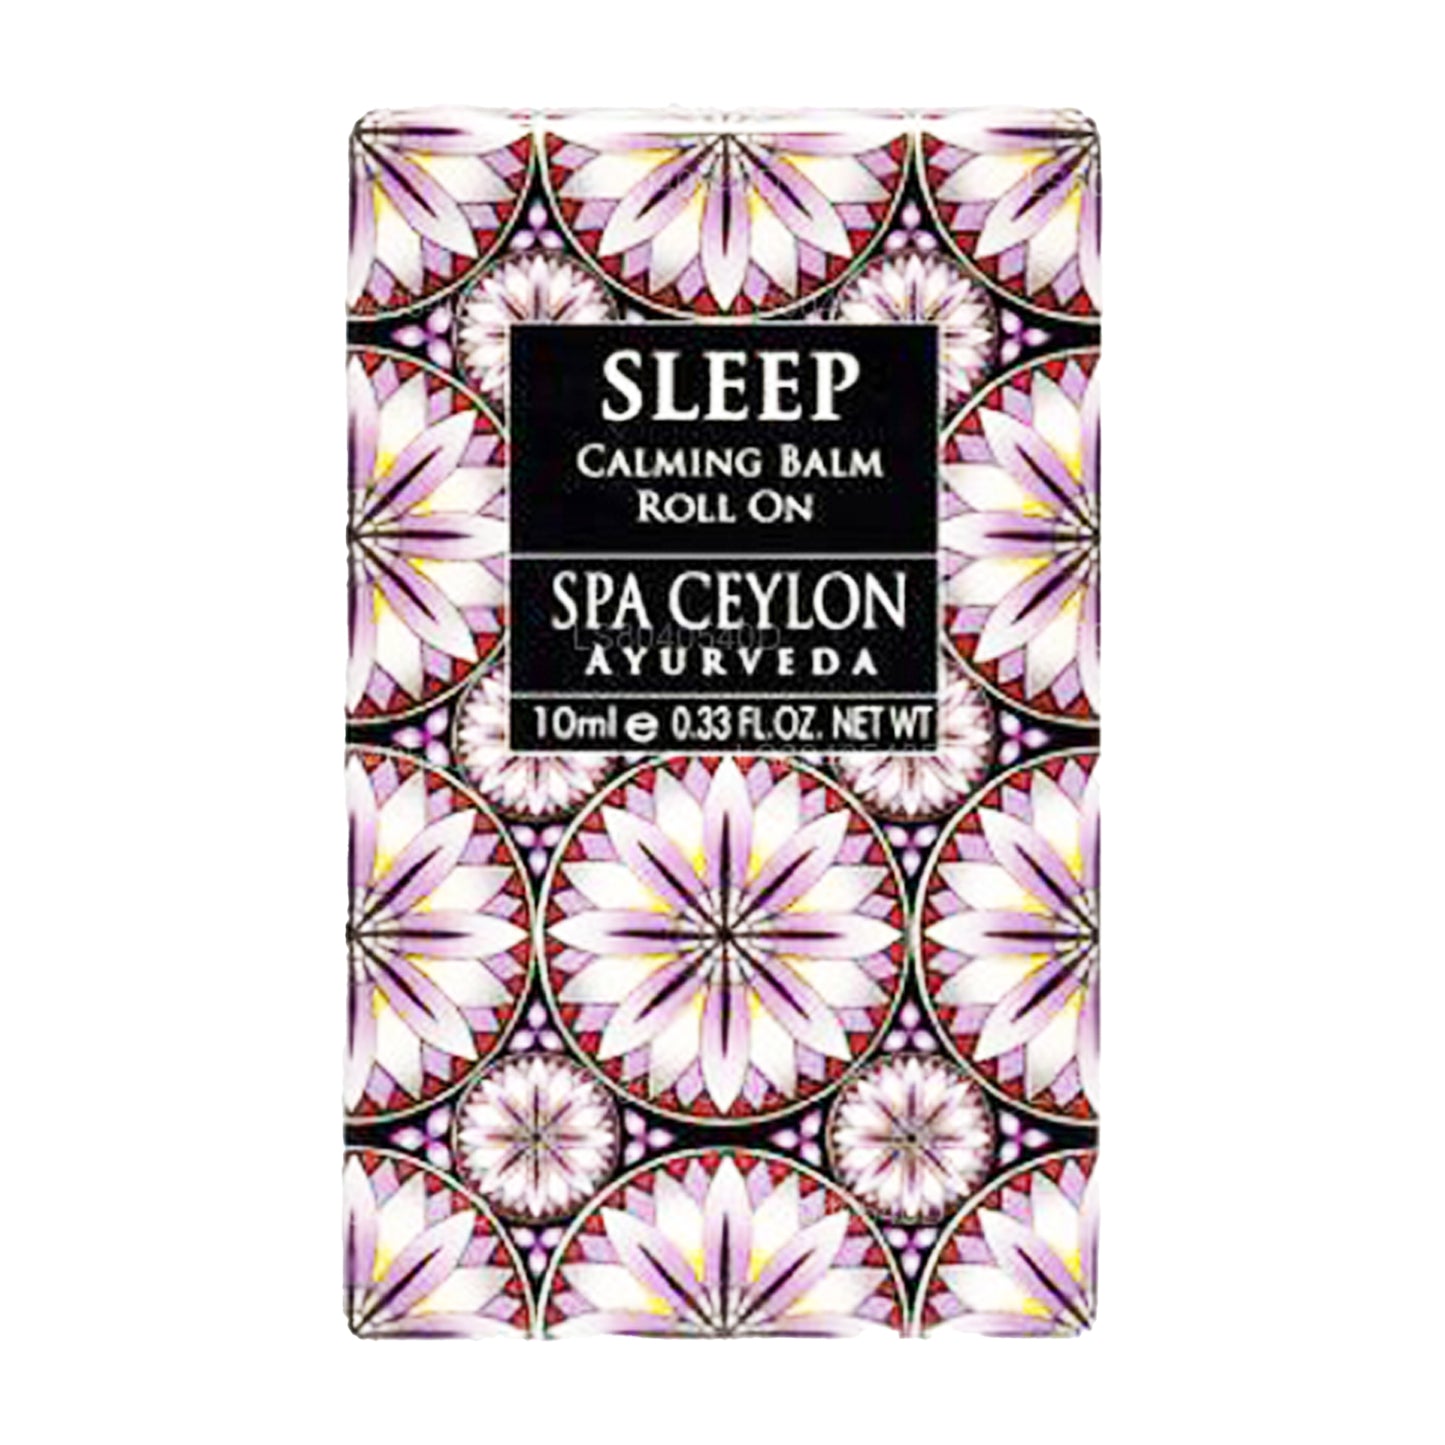 Spa Ceylon slaapkalmerende balsem Roll On (10 ml)